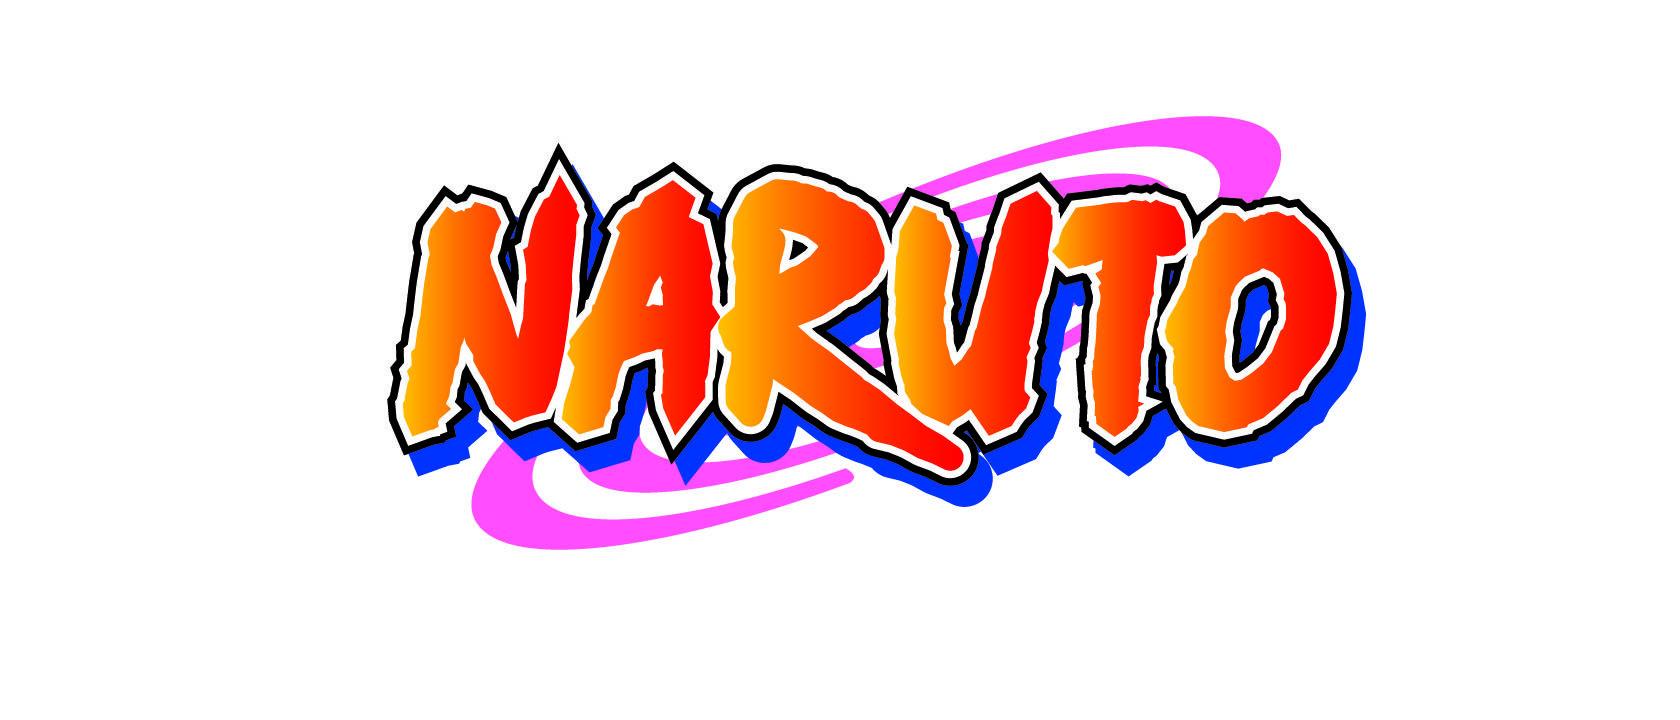 1680 x 720 · jpeg - 11+ Naruto Shippuden Logo PNG